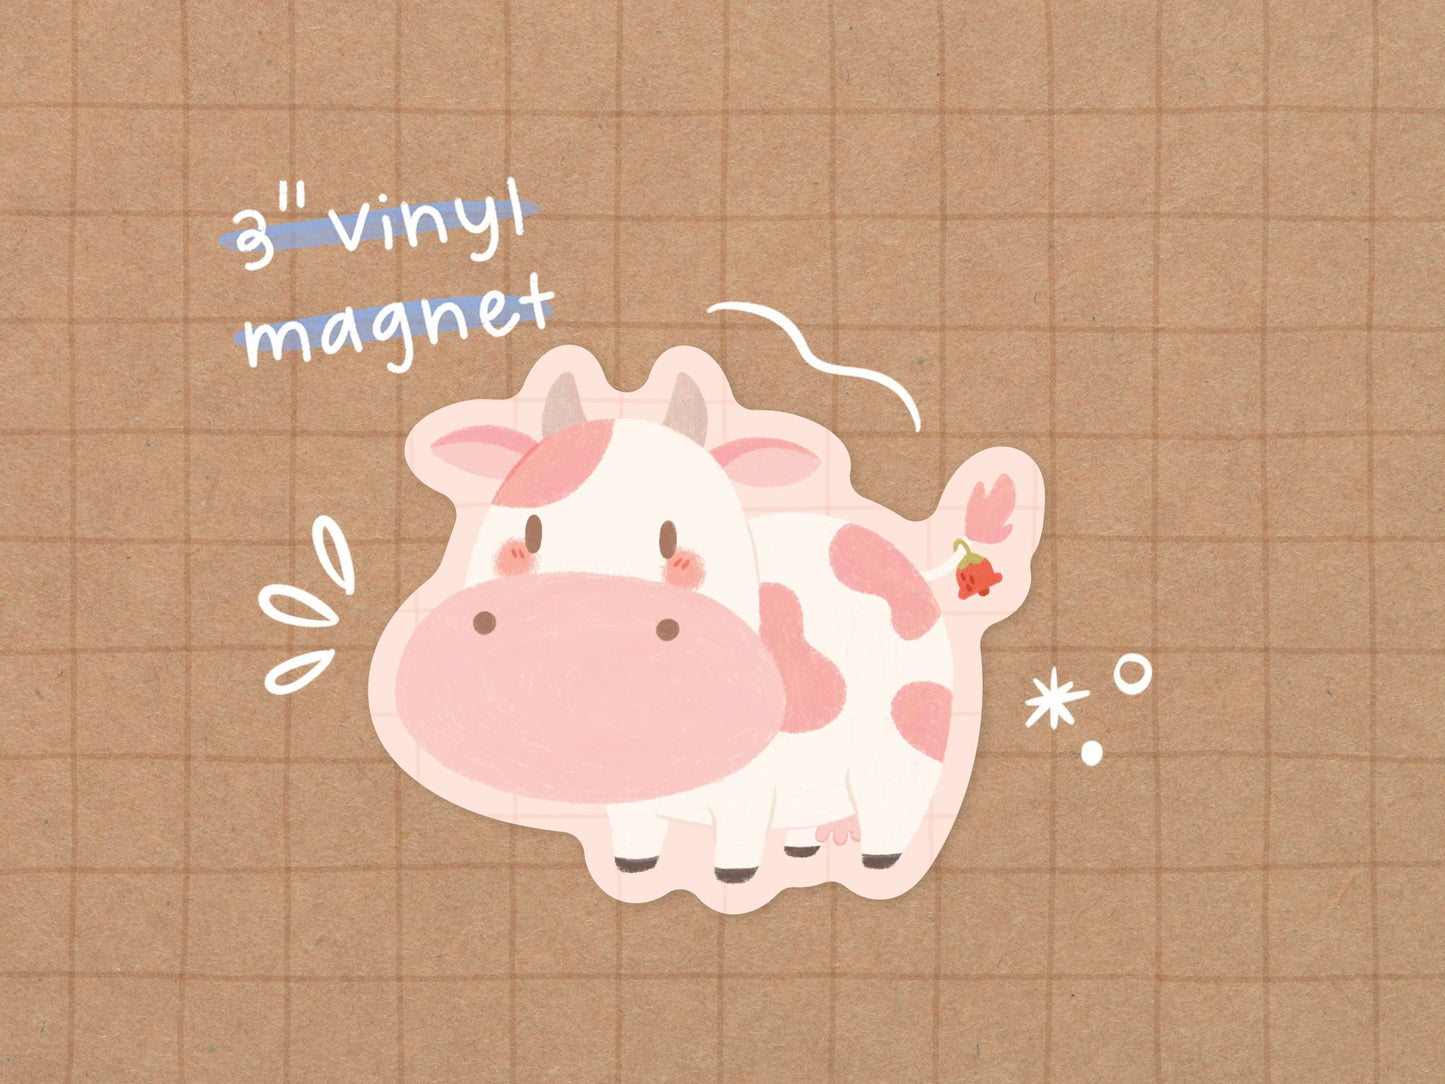 Strawberry Cow Vinyl Magnet